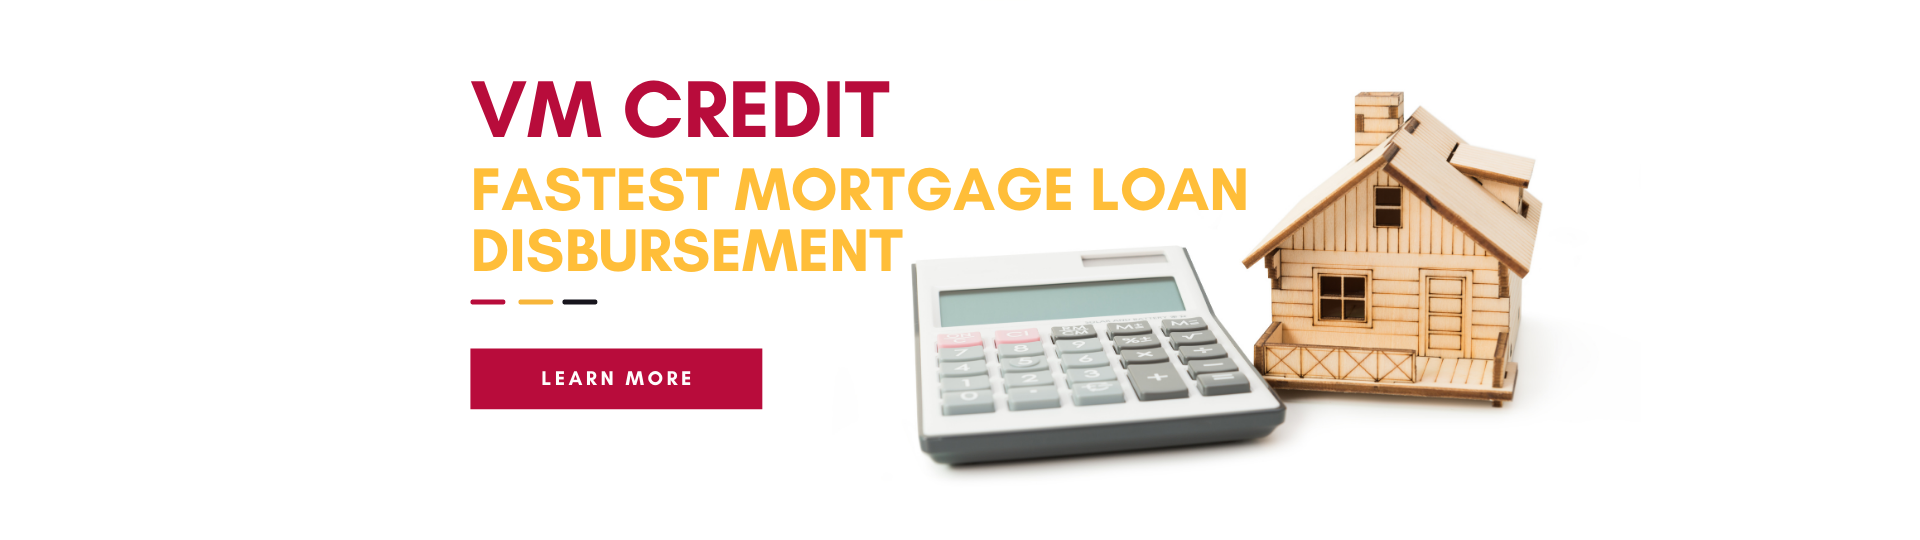 vm credit mortgage loans